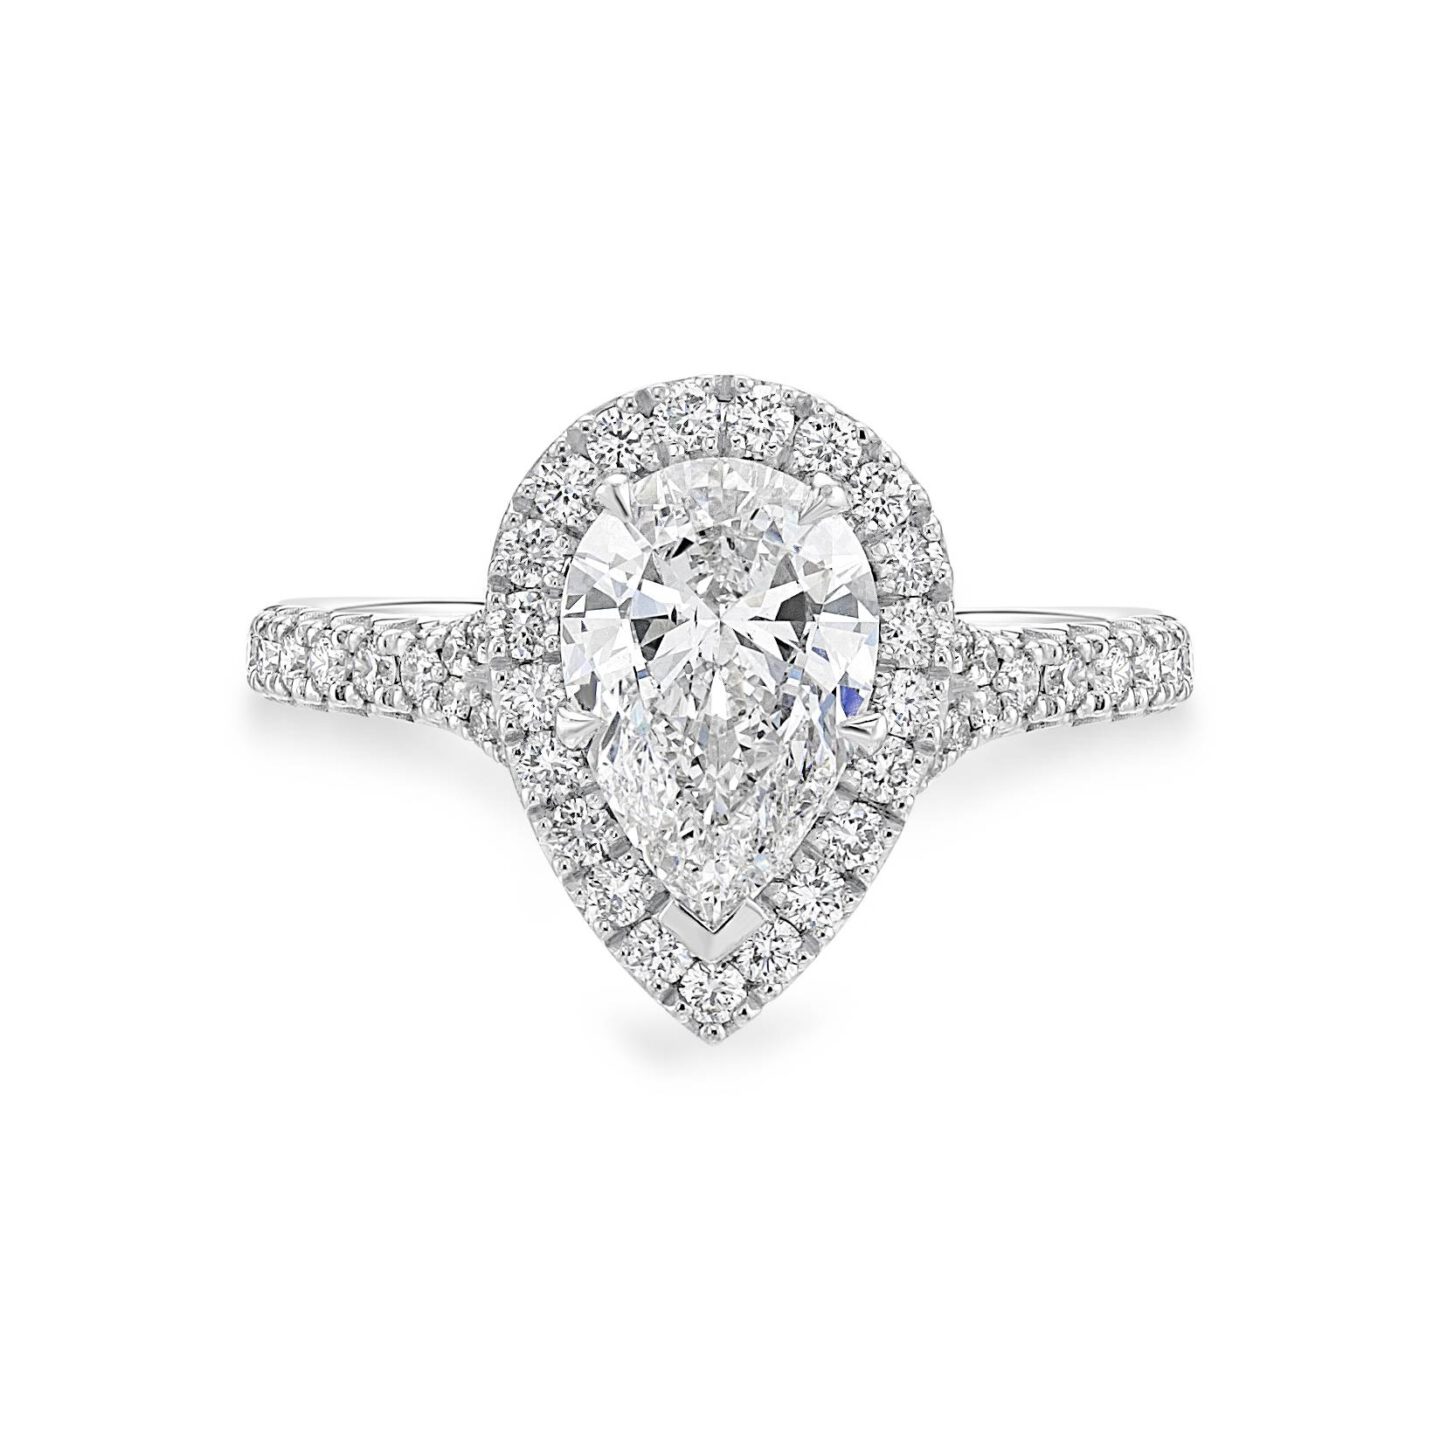 Halley – Pear Cut Diamond Engagement Ring